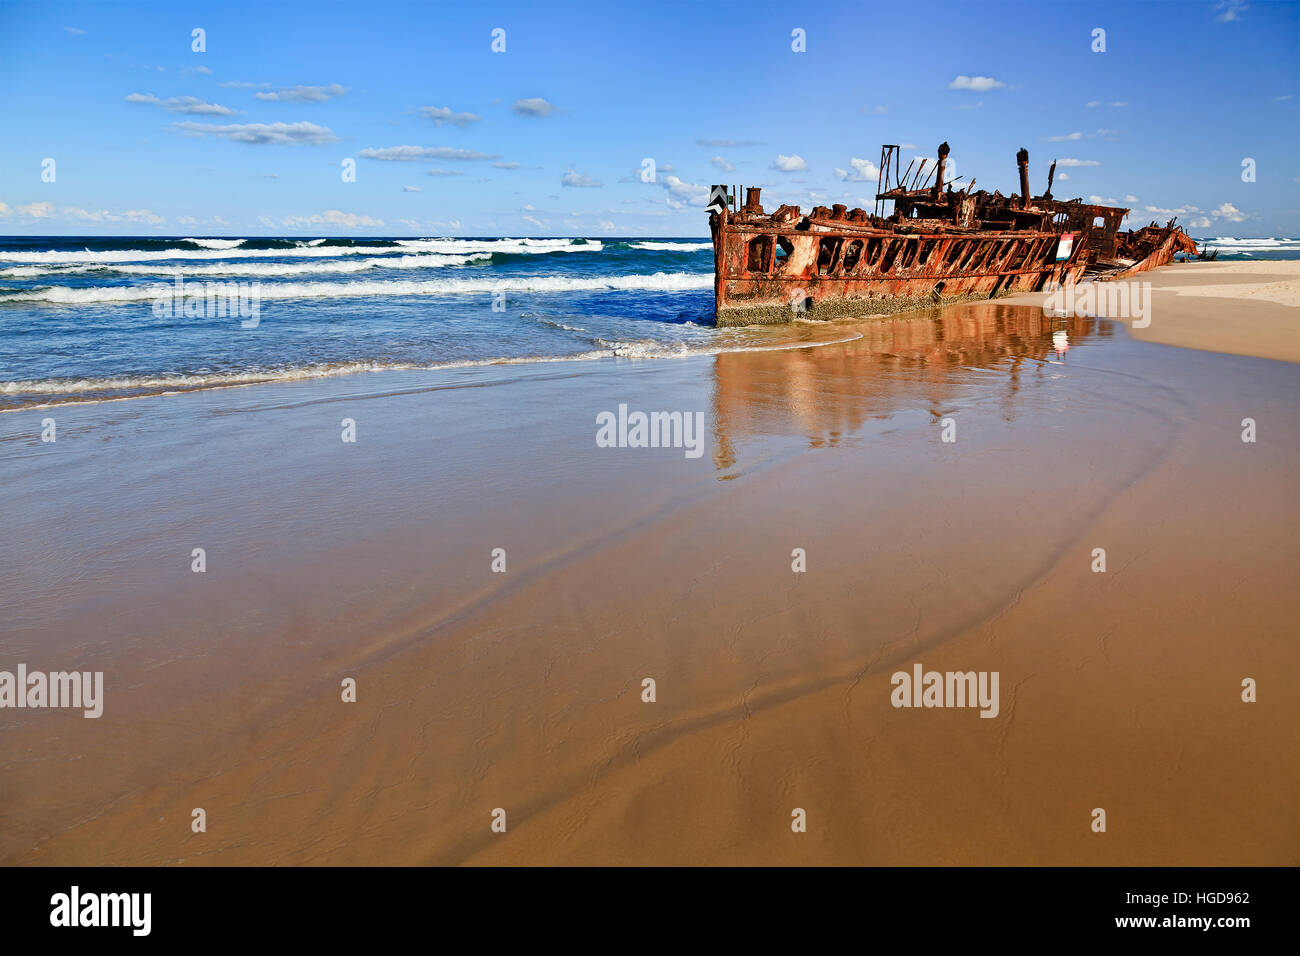 Maheno SS shipwreck on sandy beach of Fraser island against open pacific ocean horizon. Empty beach soaks smooth shallow waves reflecting rusty Stock Photo